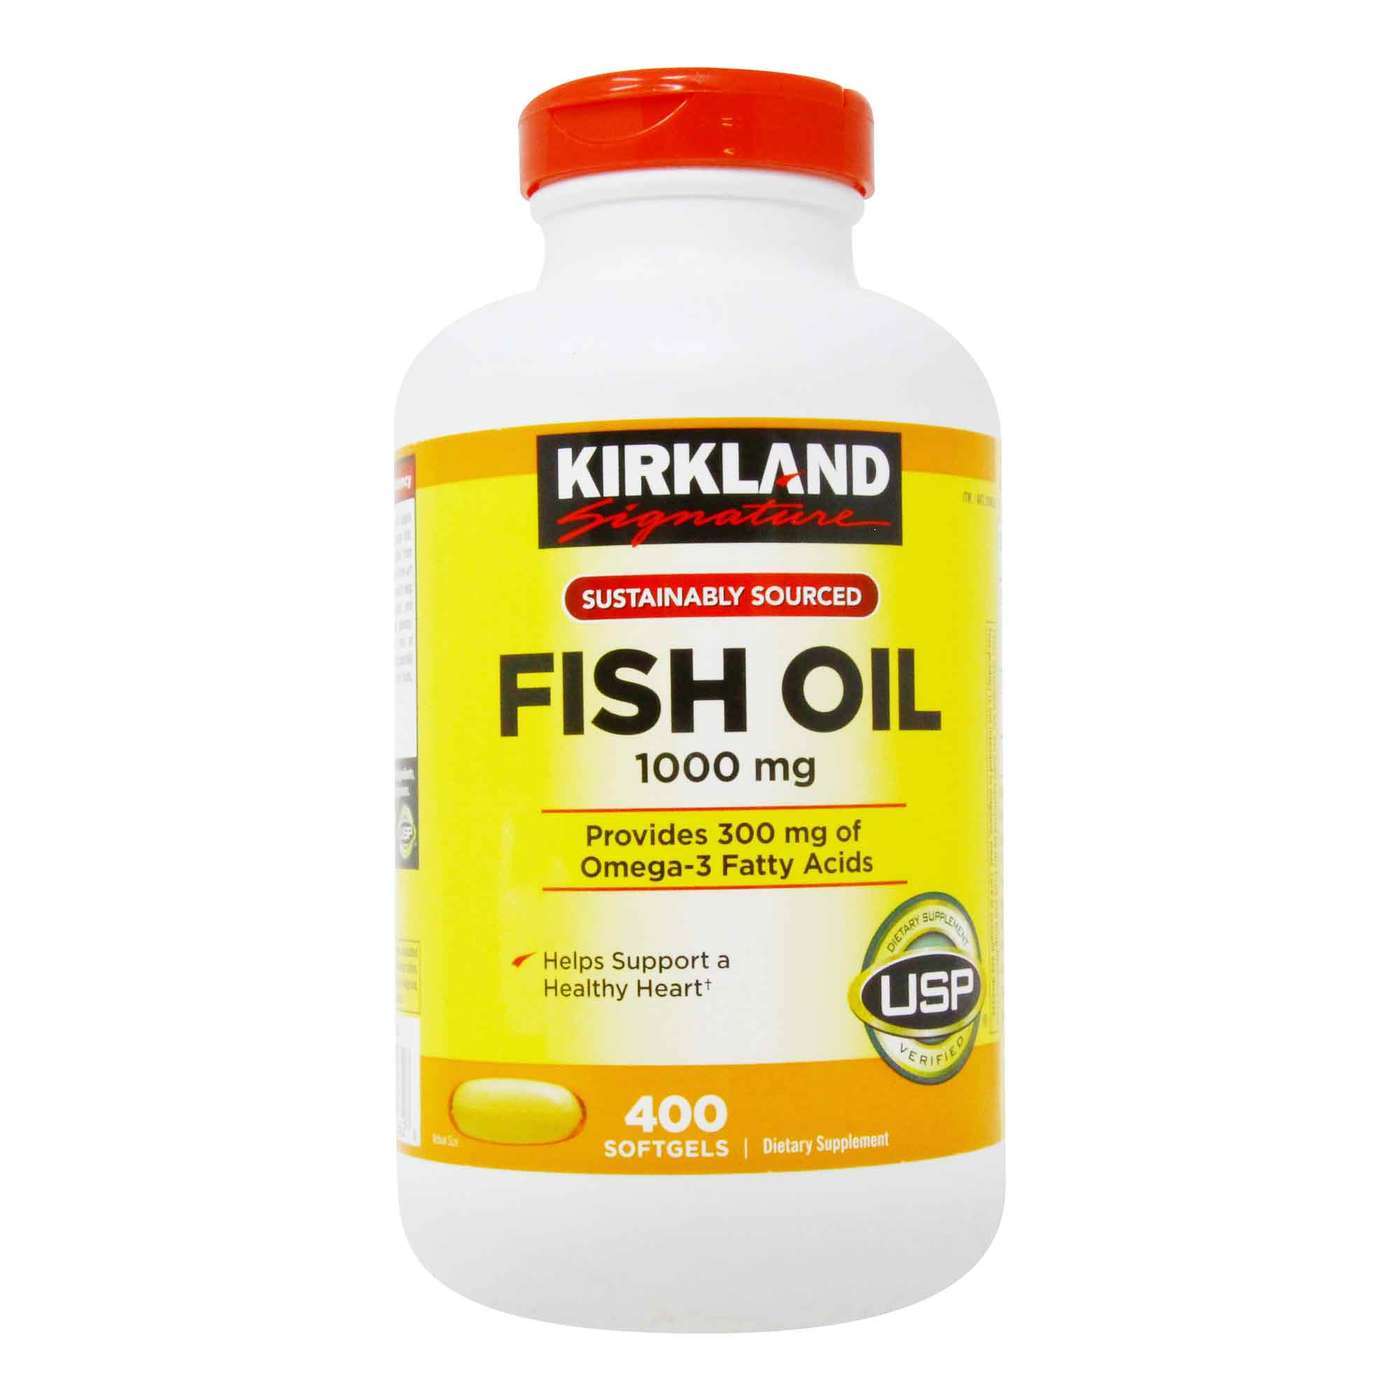 Kirkland Signature Fish Oil - 1,000 mg 